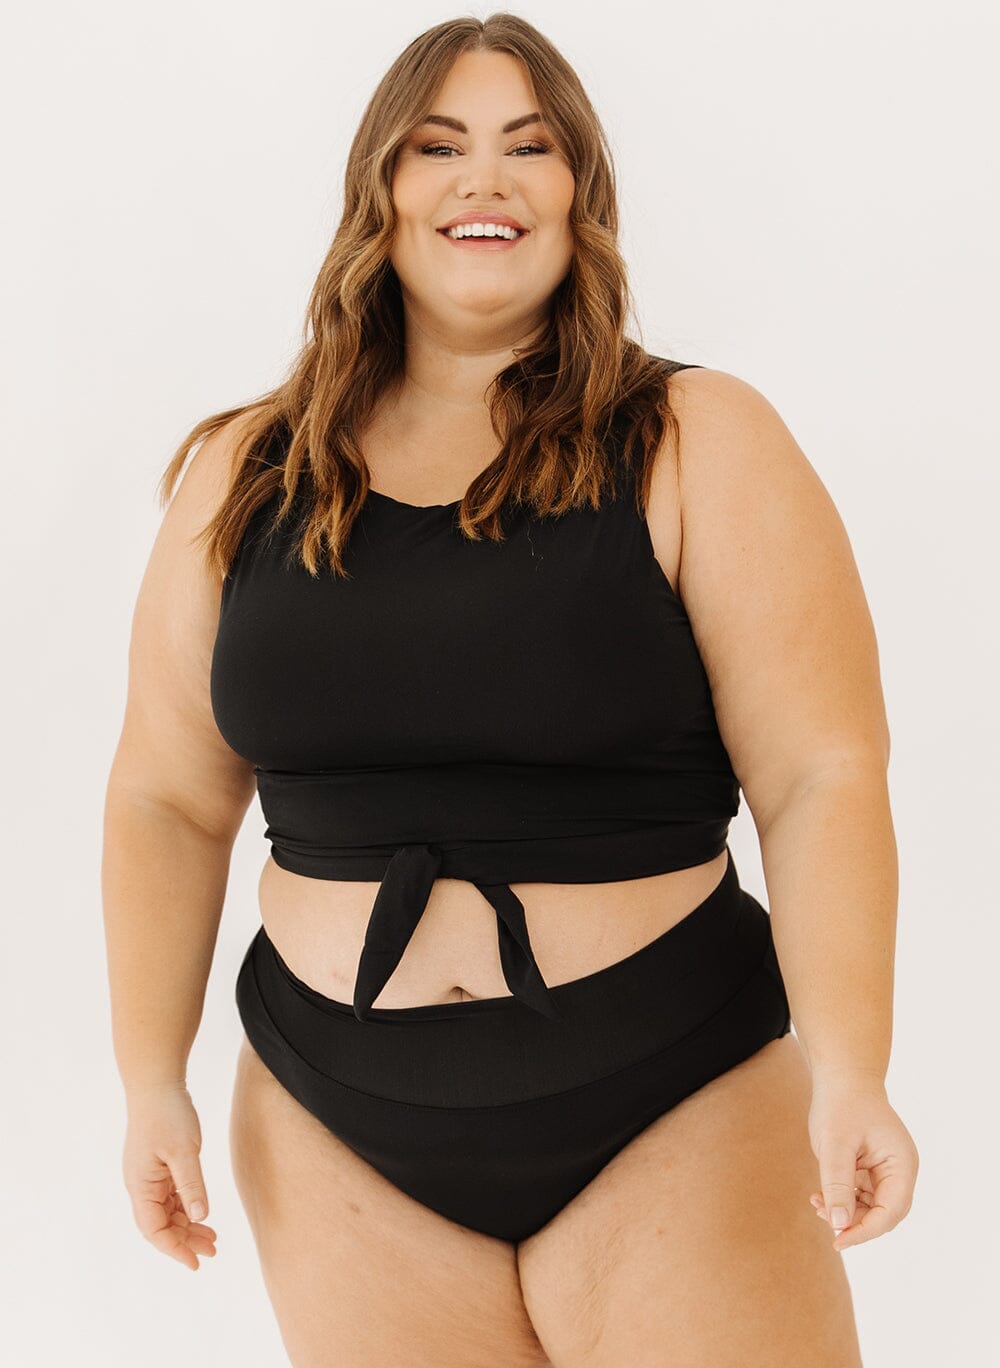 Wholesale Bikinis Women's High Waist Swimsuit Crop Top Cut out Two